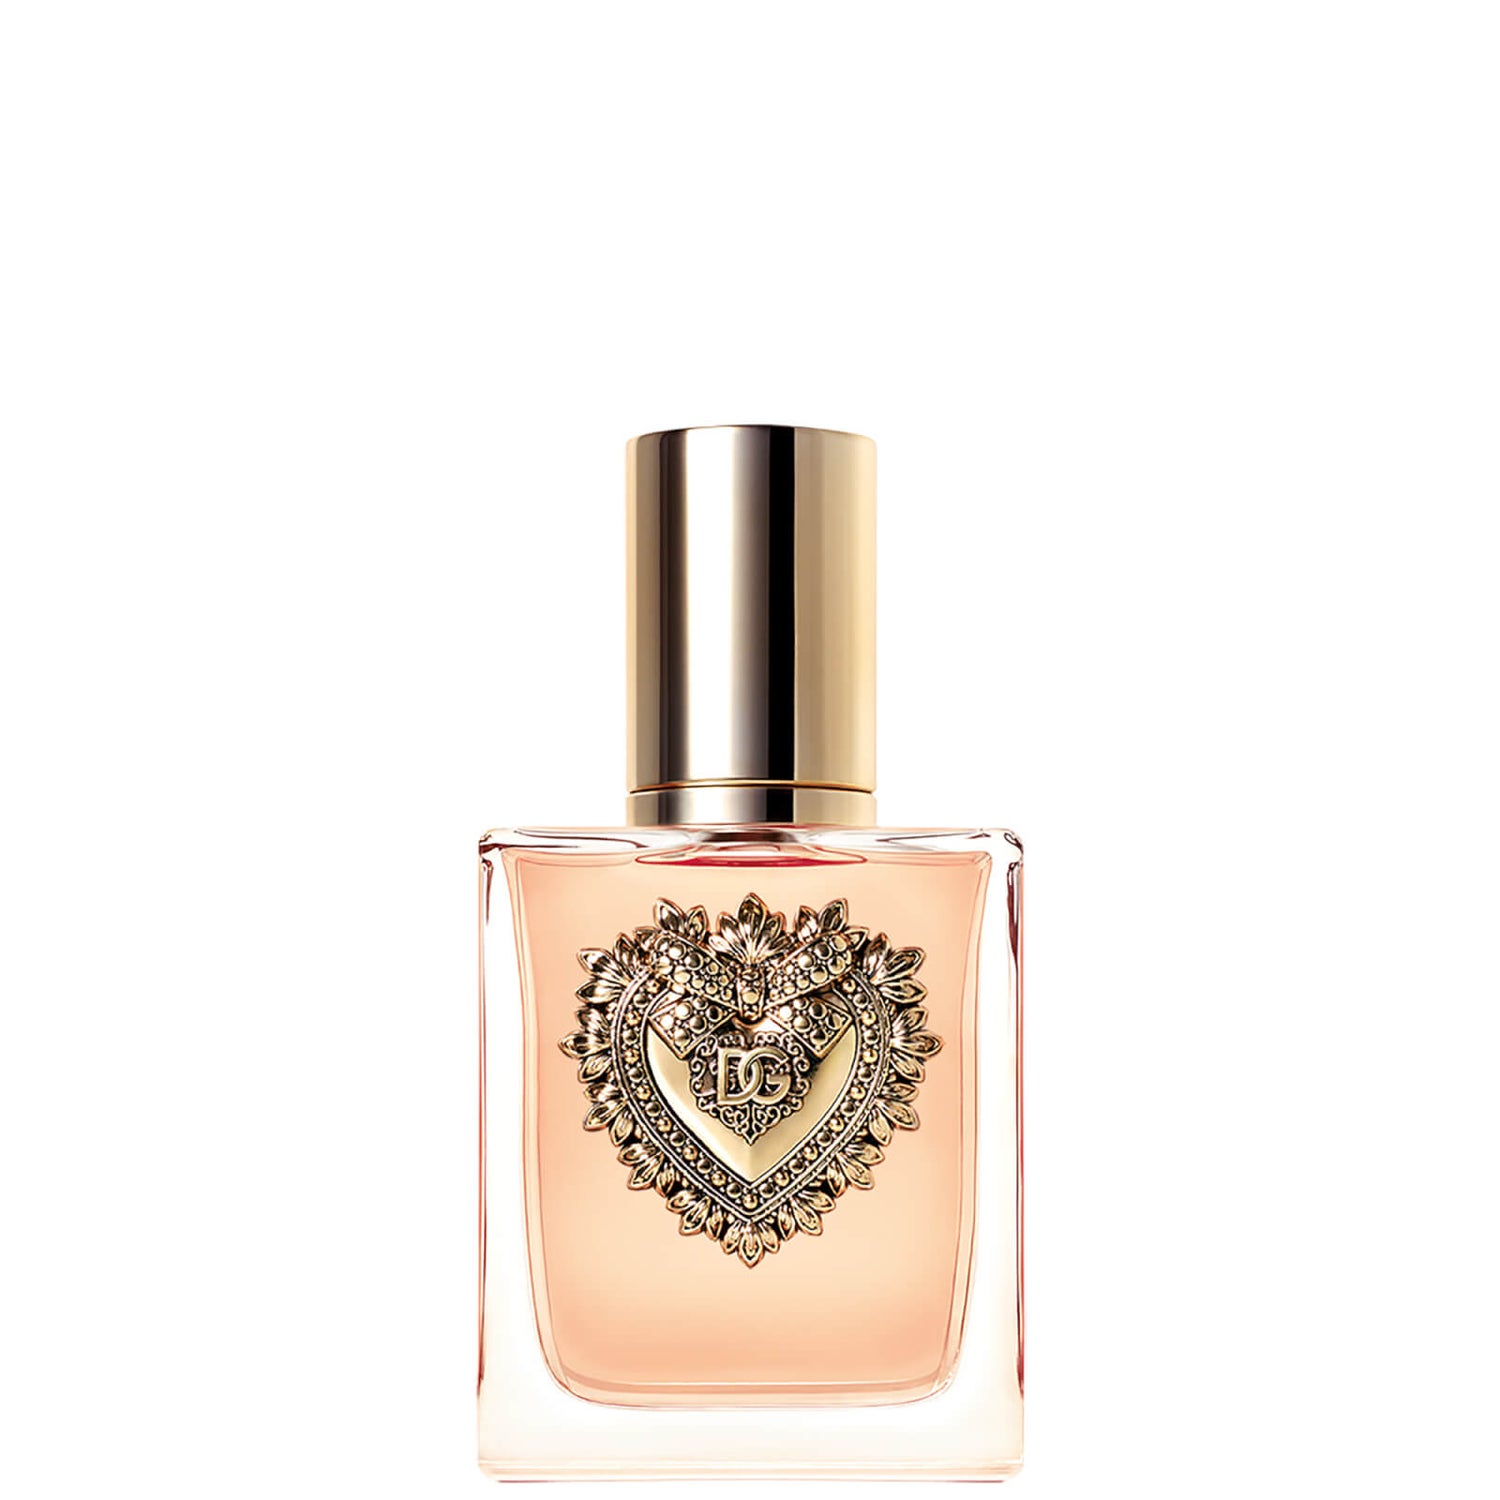 Dolce&Gabbana Devotion Eau de Parfum Spray 50ml - Spedizione GRATIS